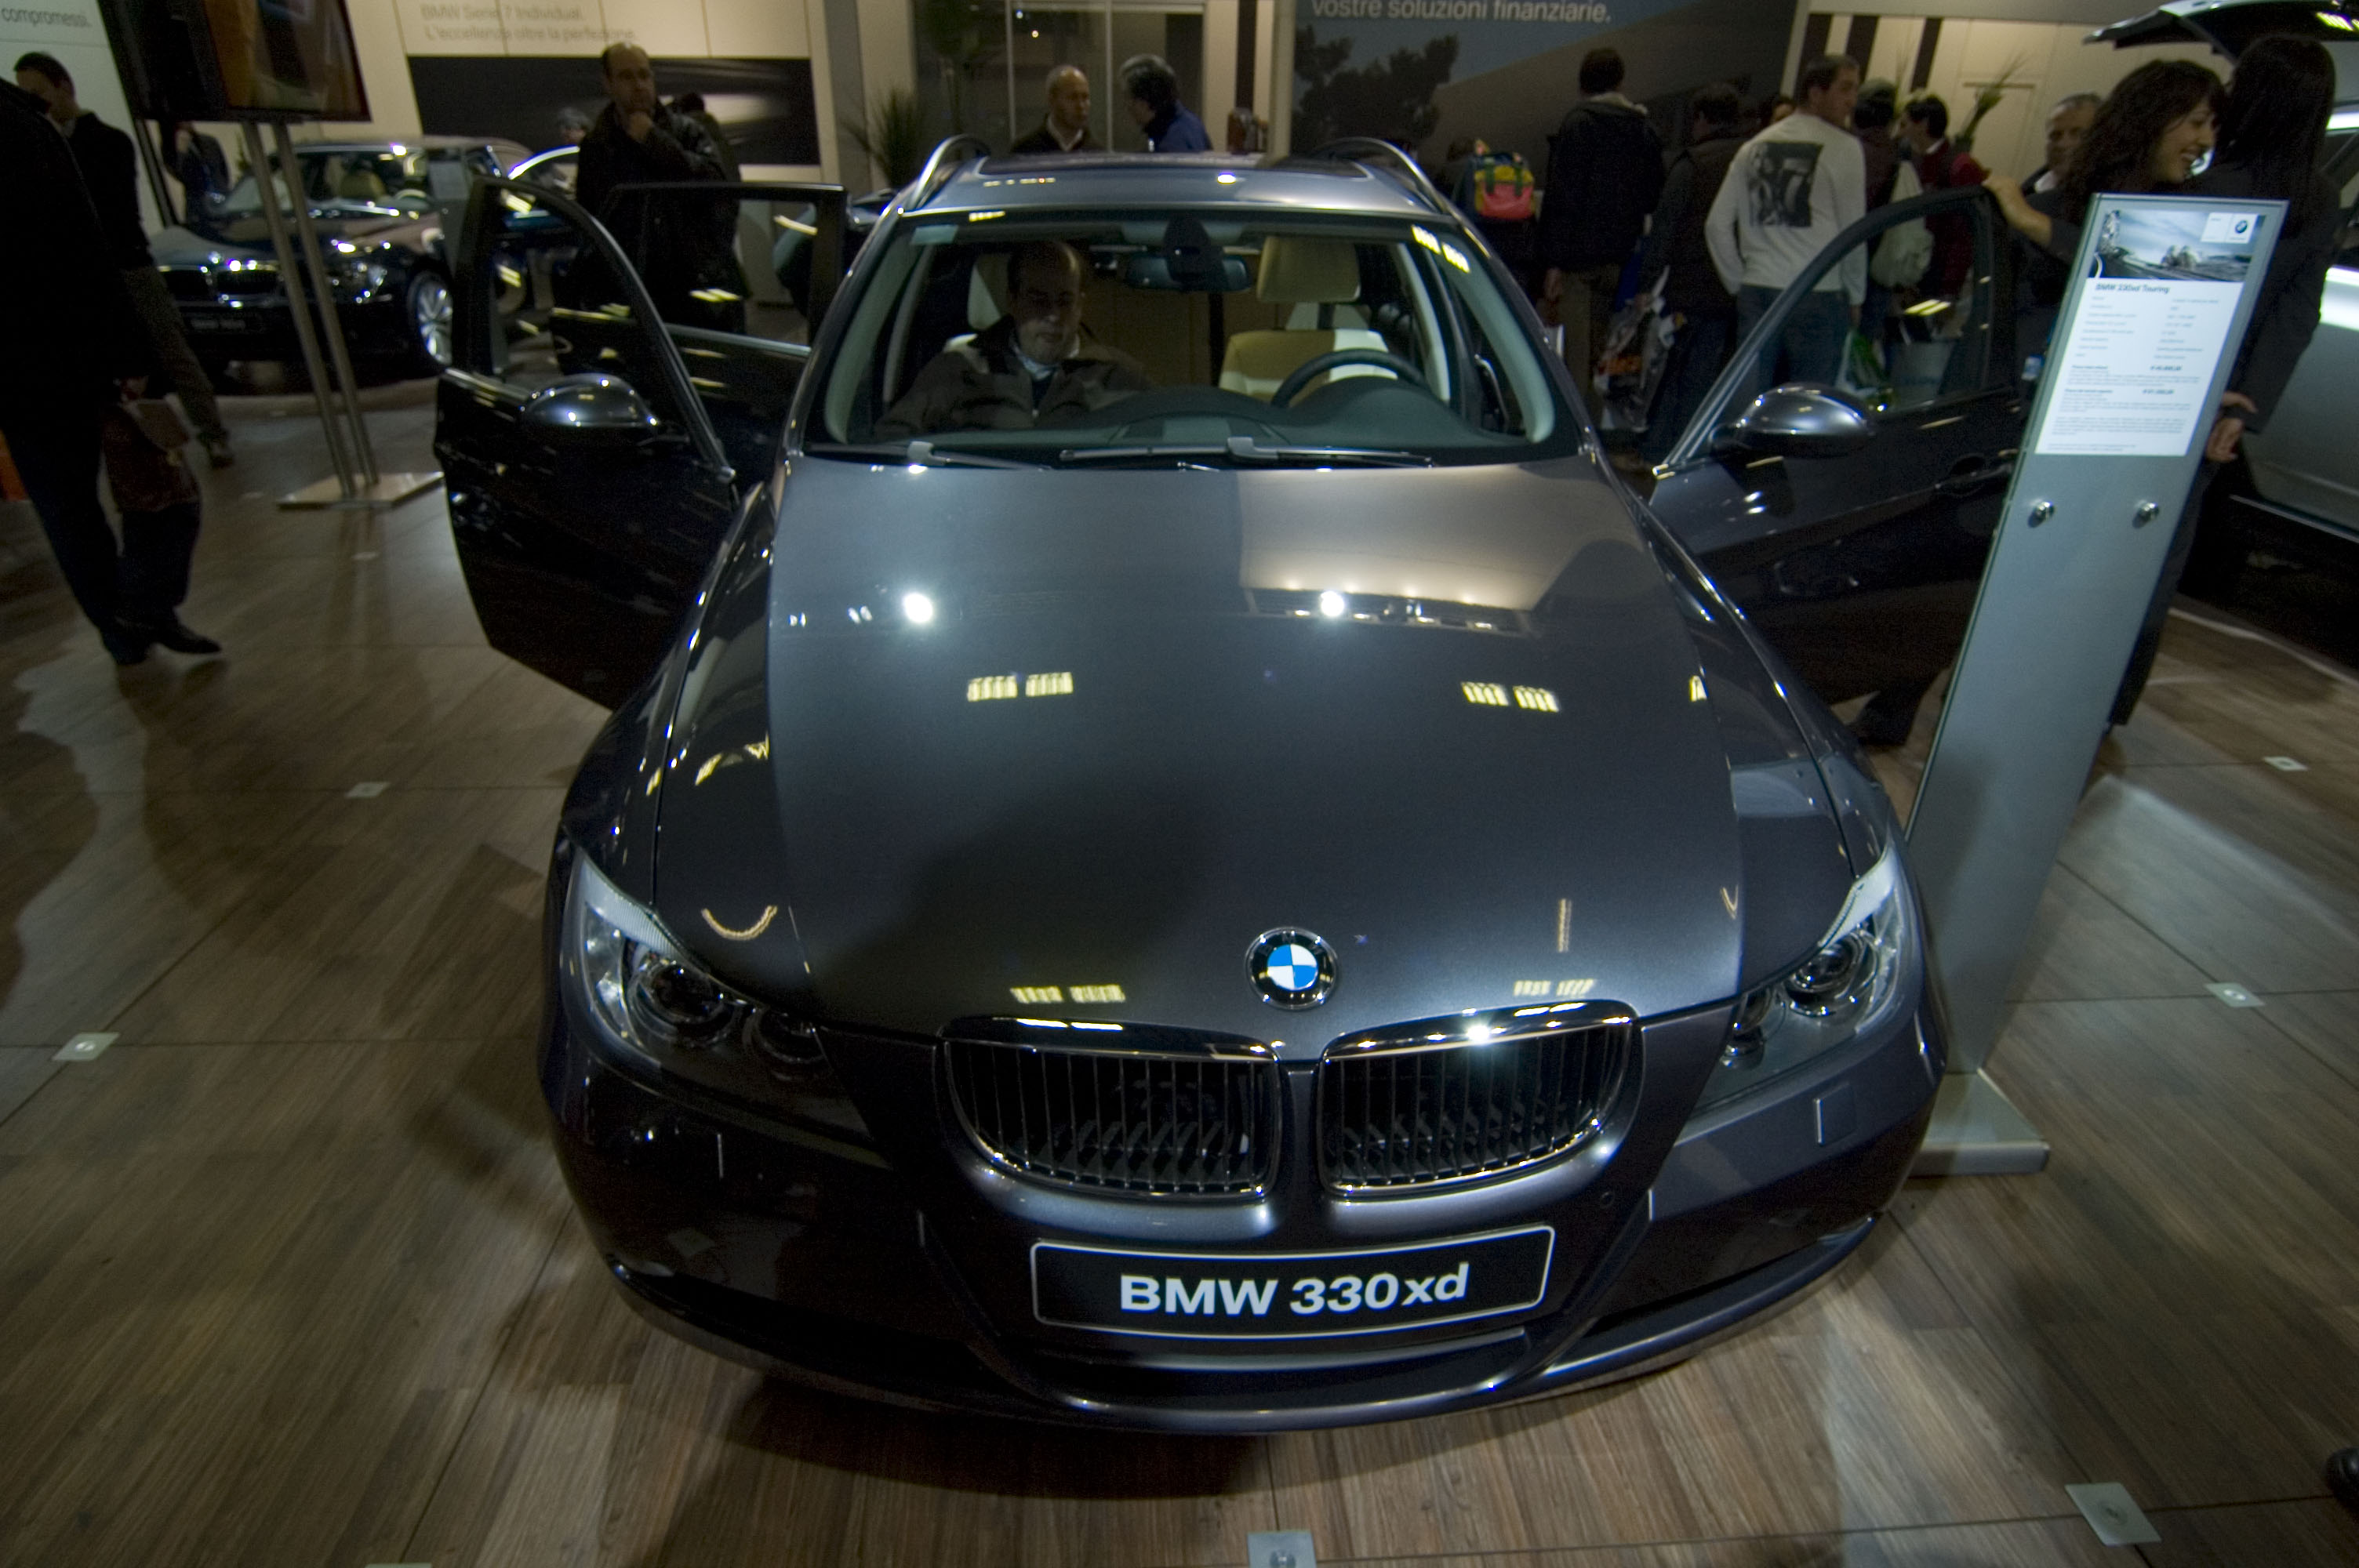 File:MotorShow 2007, BMW 330xd - Flickr - Gaspa.jpg - Wikimedia ...